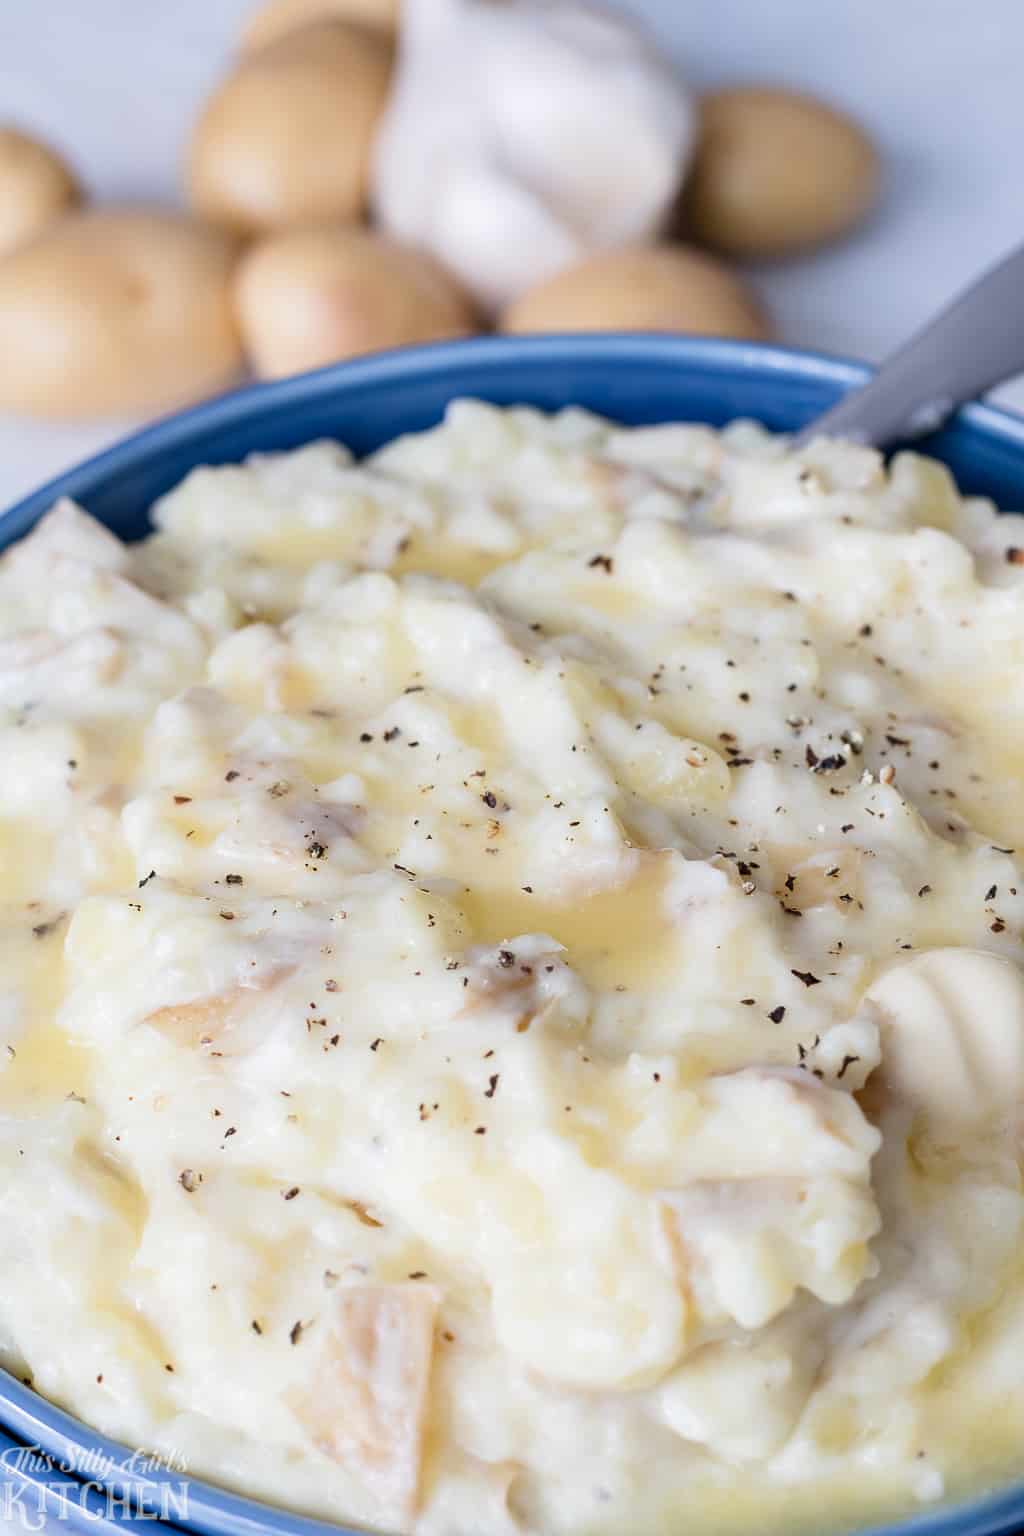 Garlic Mashed Potatoes, creamy garlic mashed potatoes ready in just 20 minutes! #Recipe from ThisSillyGirlsKitchen.com #mashedpotatoes #thanksgiving #christmas #garlicmashedpotatoes